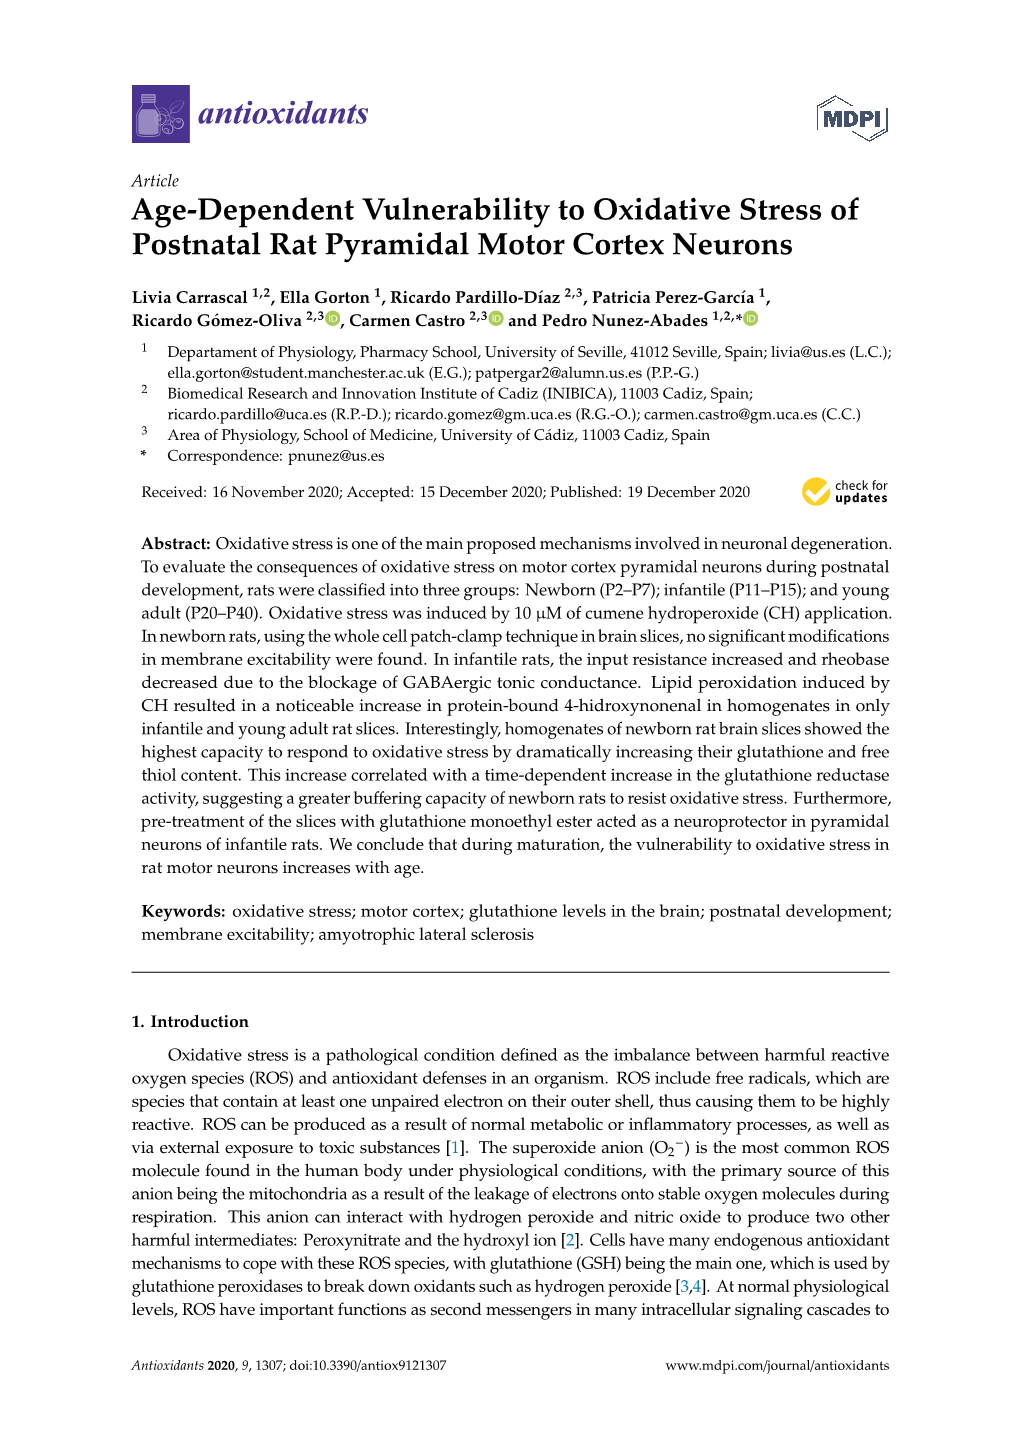 Age-Dependent Vulnerability to Oxidative Stress of Postnatal Rat Pyramidal Motor Cortex Neurons